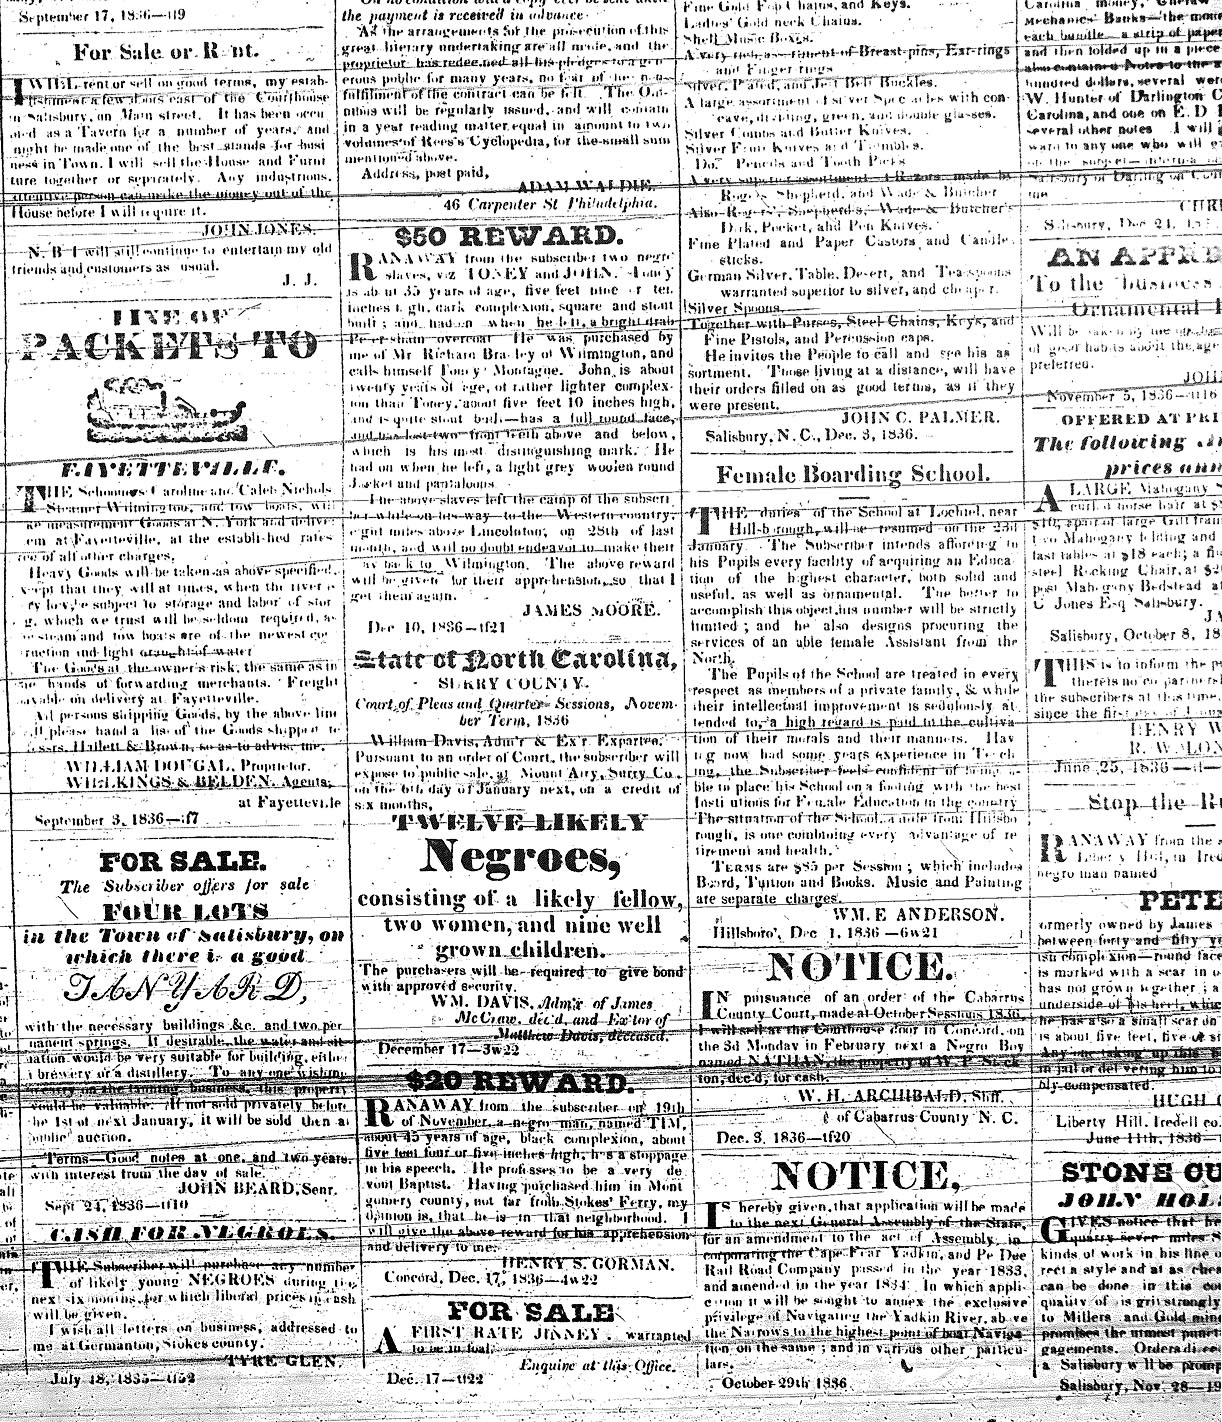 Carolina Watchman ads: January 7, 1837